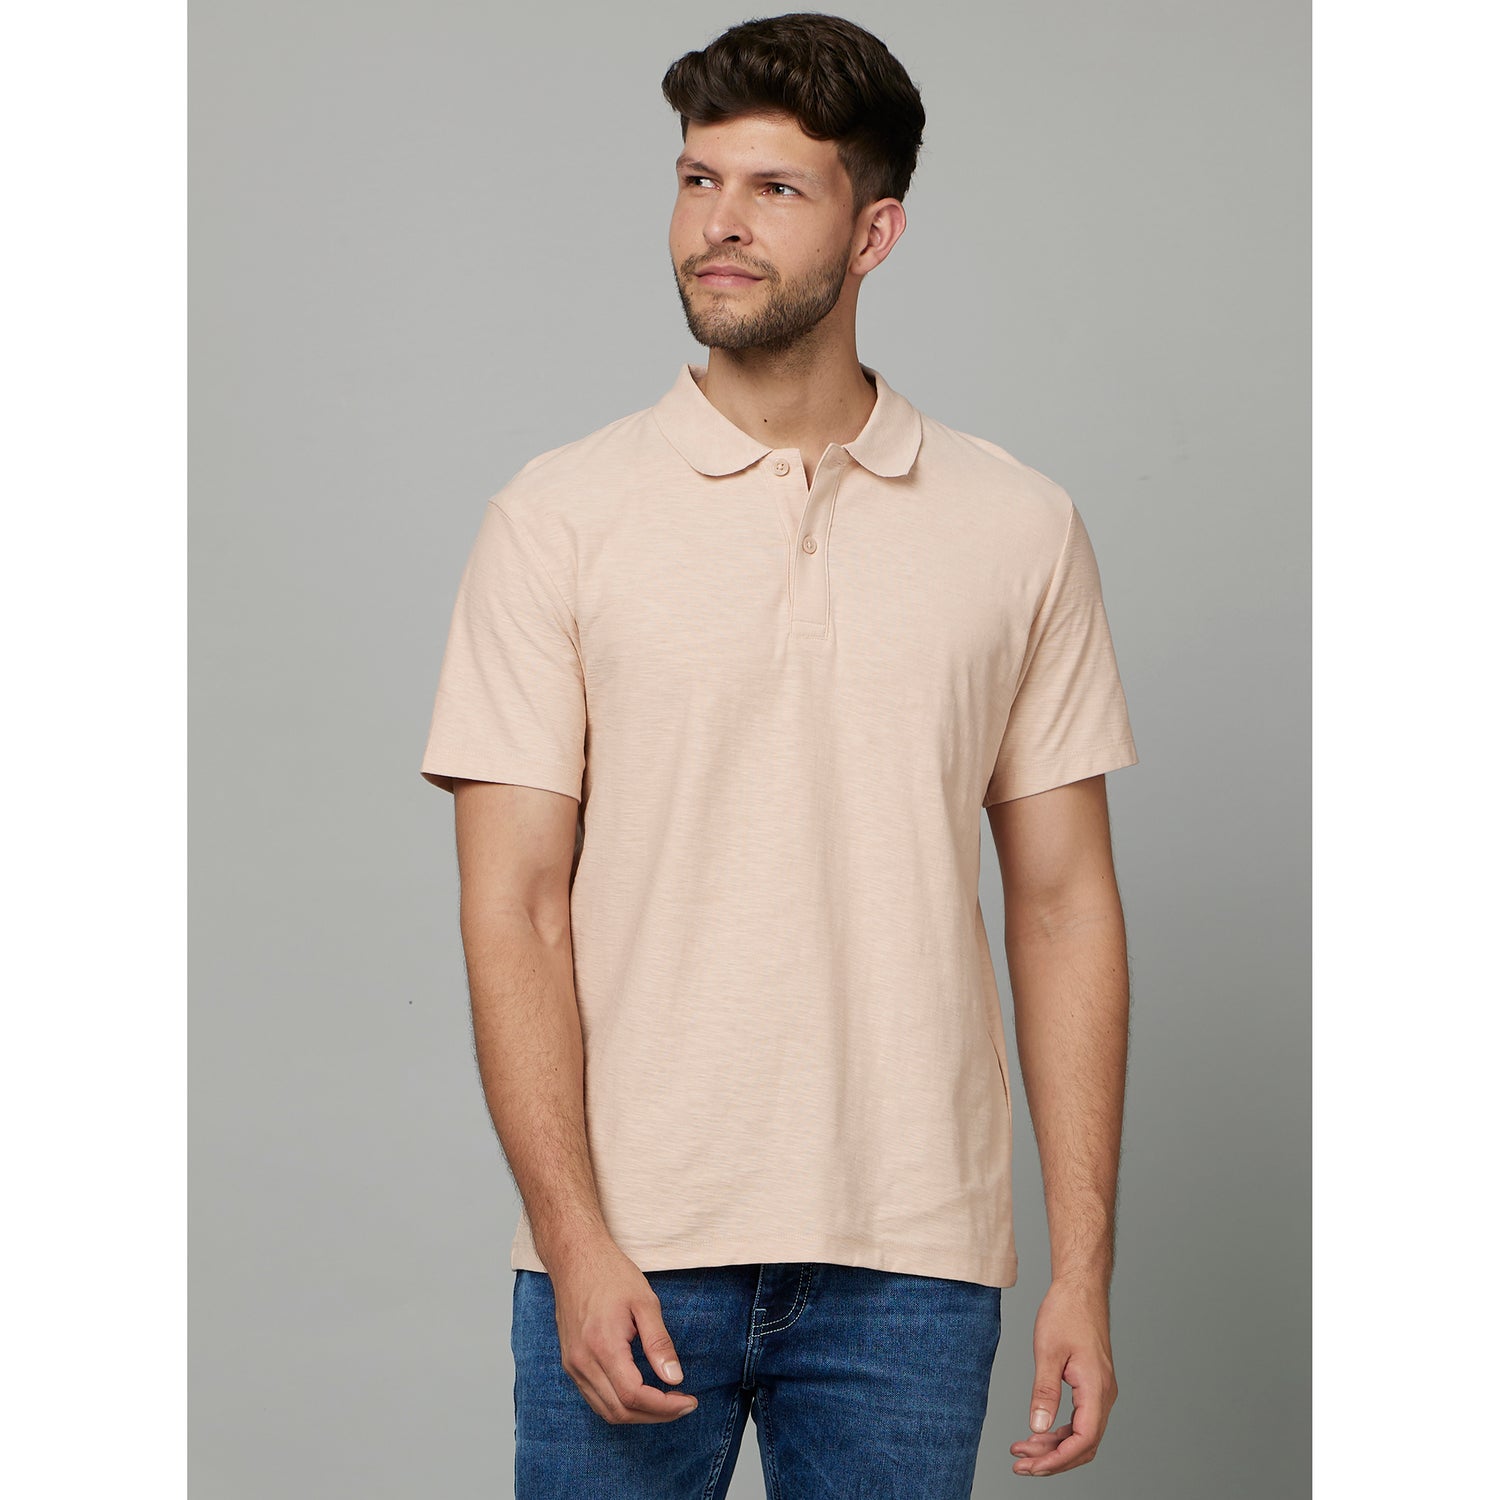 Cream Solid Short Sleeves Fashion Polo T-shirt (FEFLAME)